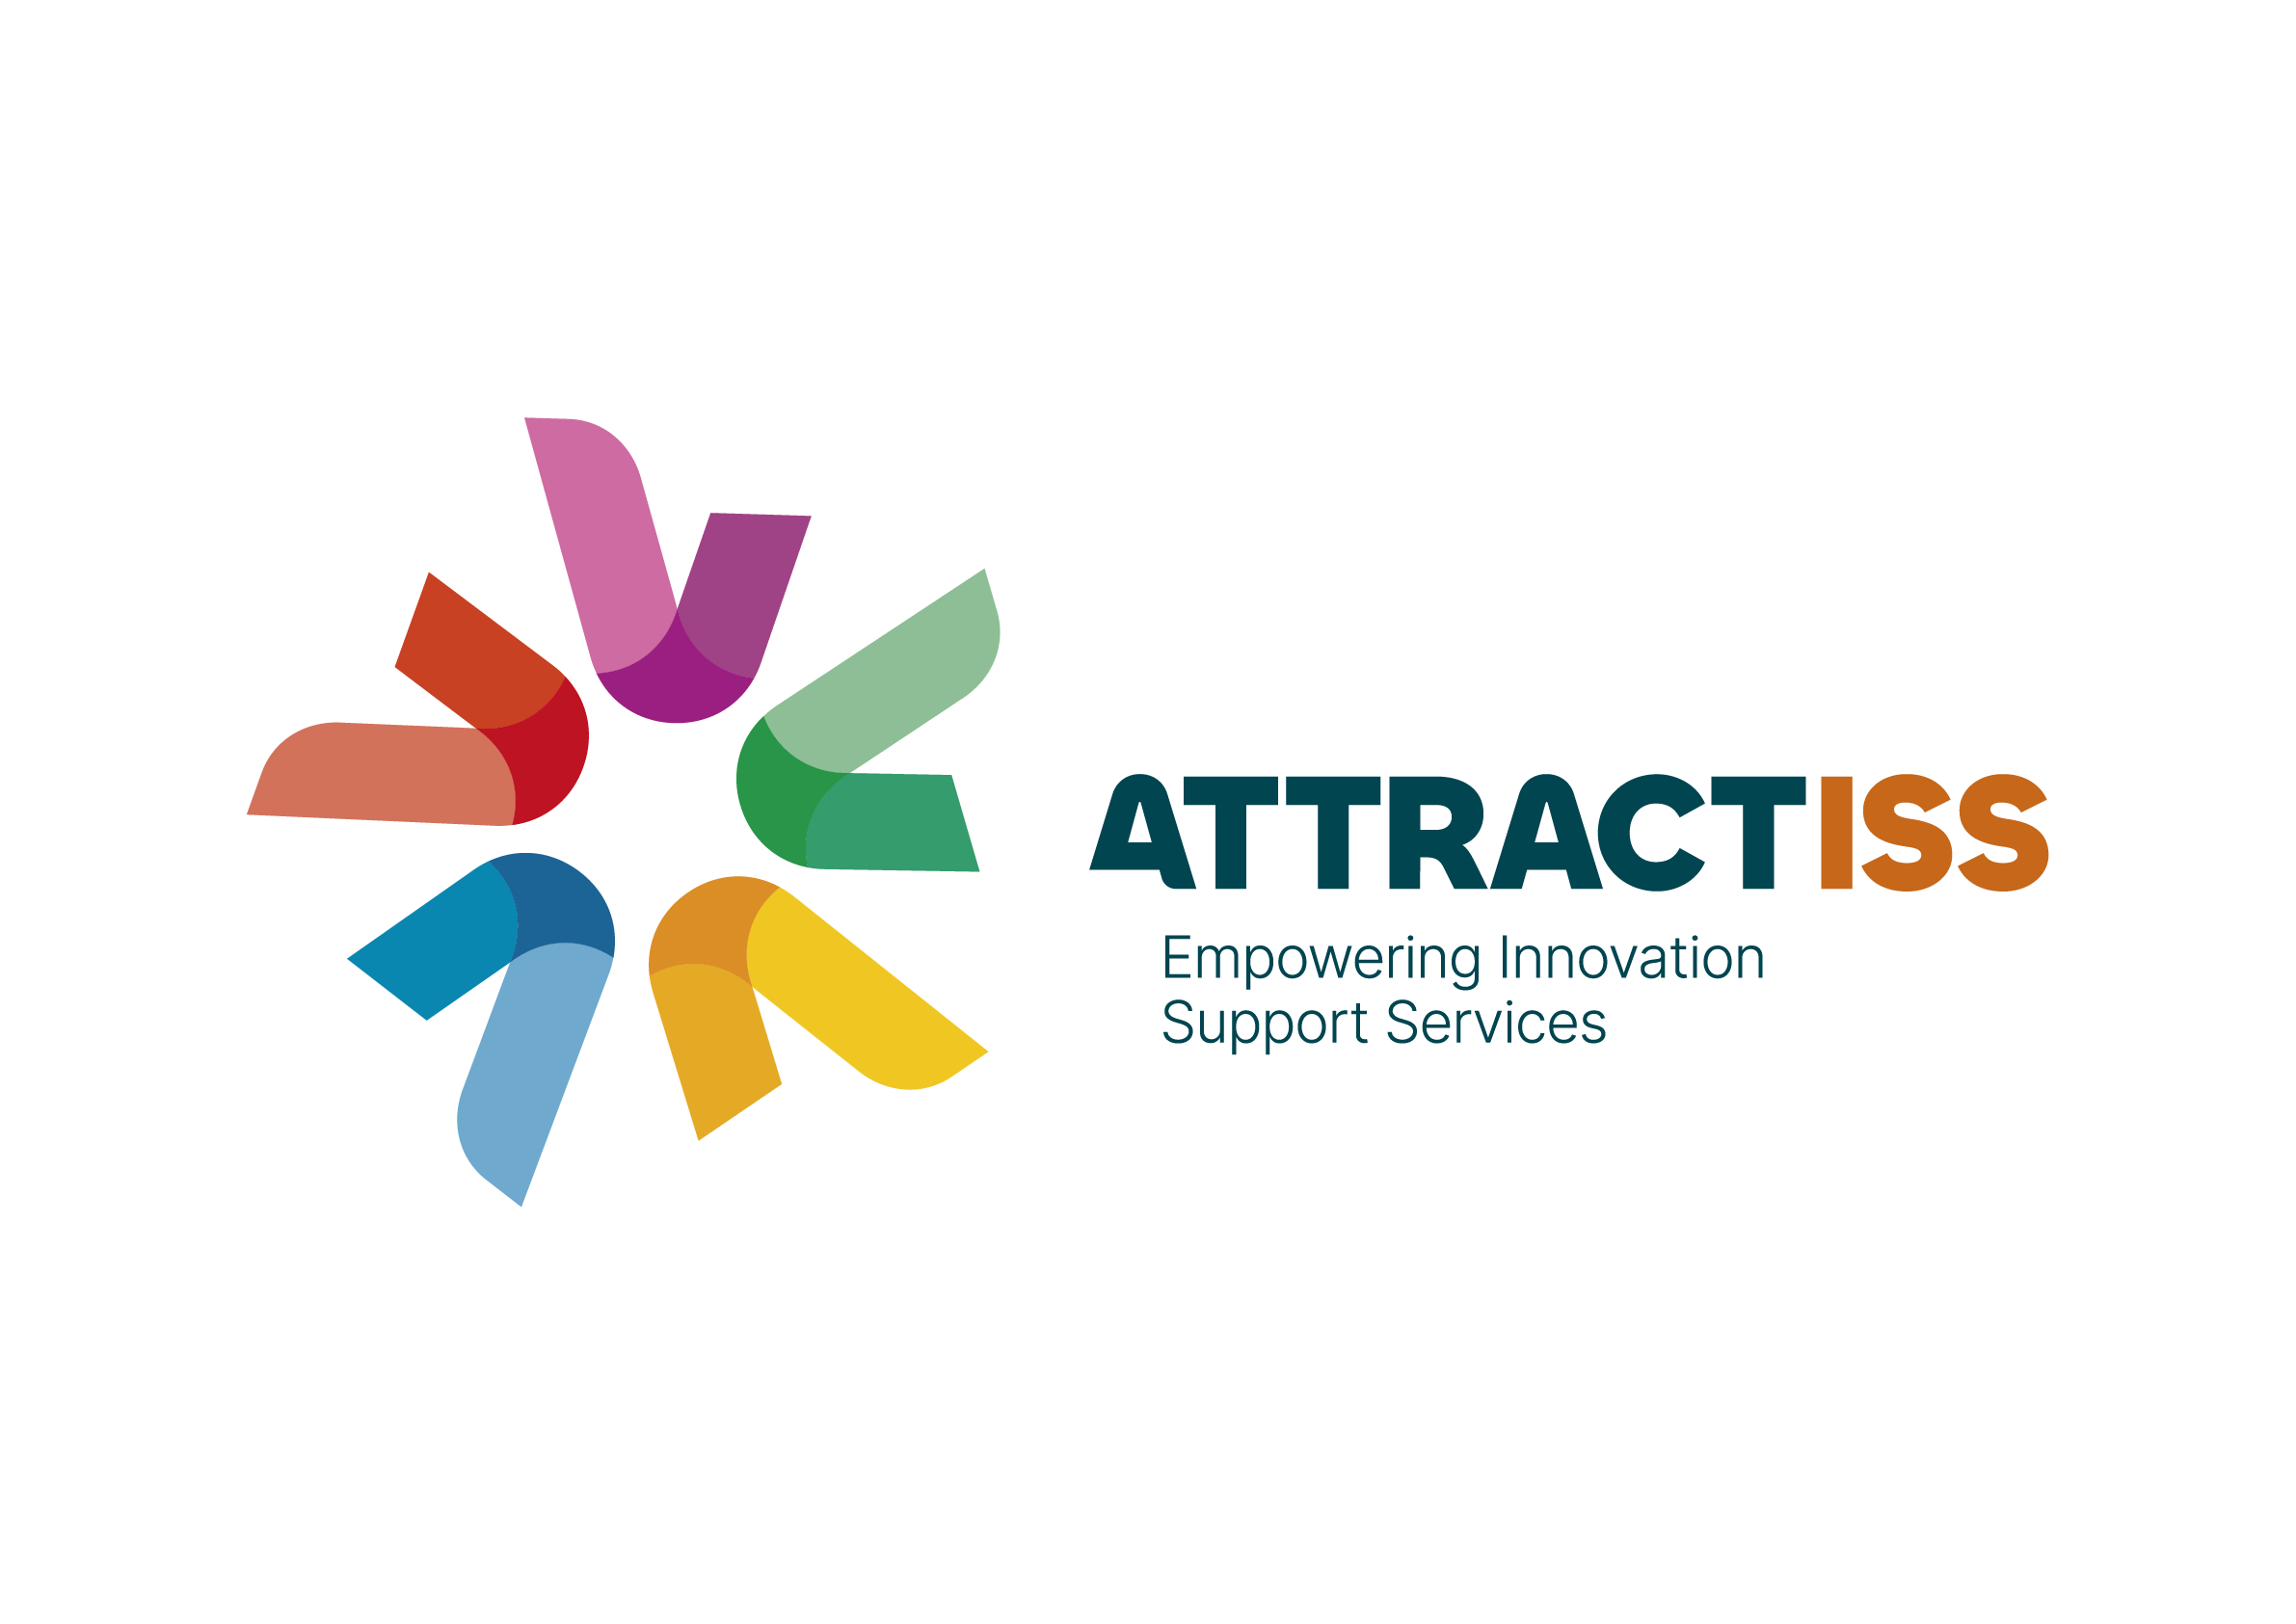 ATTRACTISS logo